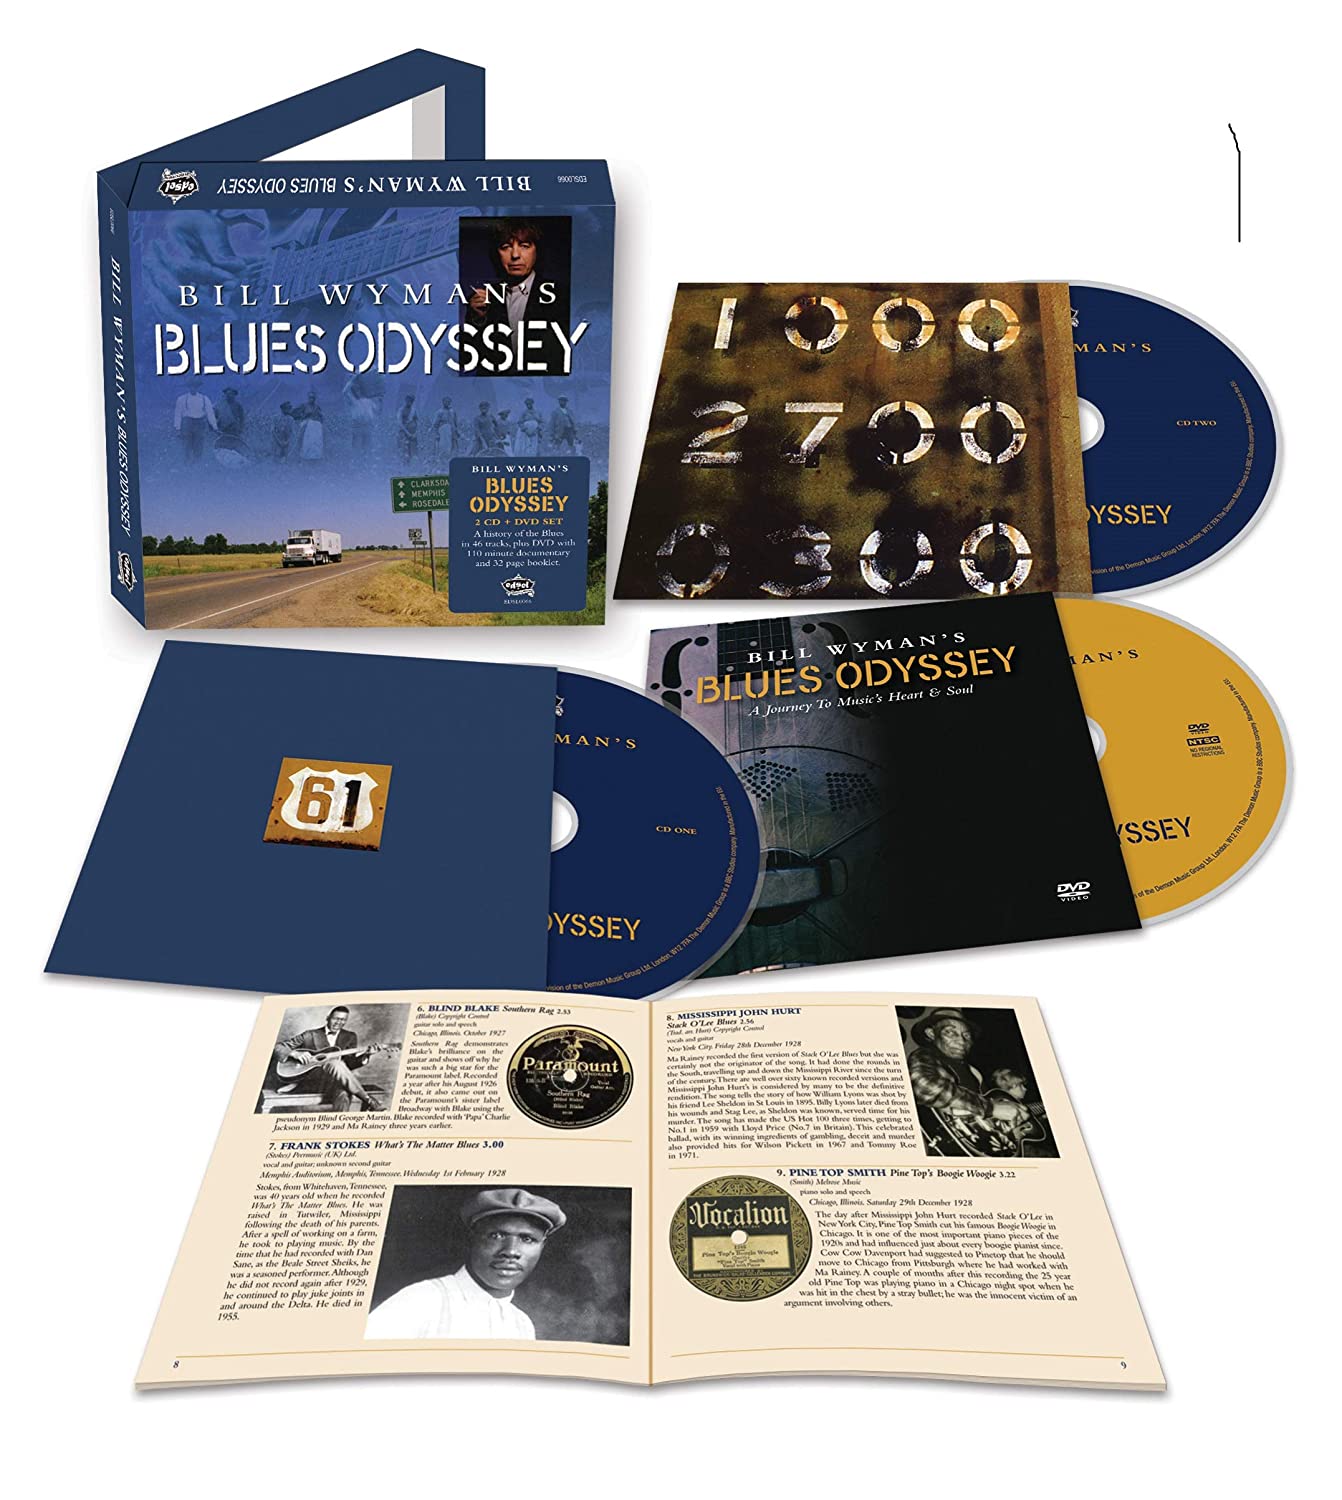 'Bill Wyman’s Blues Odyssey’ 다큐멘터리 음악 (Bill Wyman’s Blues Odyssey OST by Bill Wyman) 